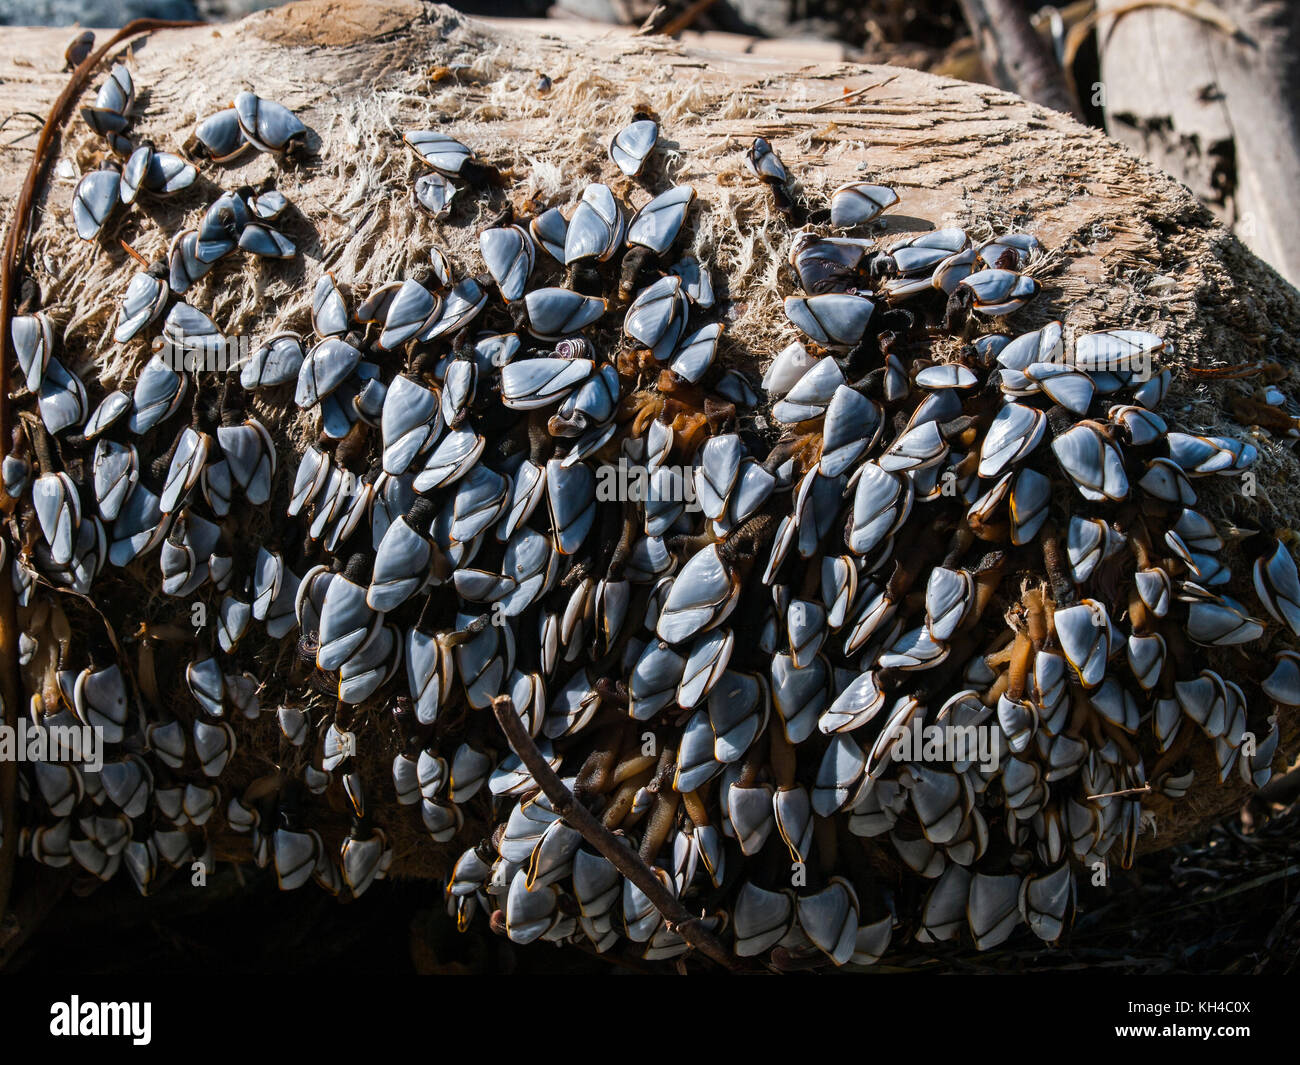 Clump of  Pelagic Goose-Neck Barnacles washed up on a large driftwood log. Stock Photo